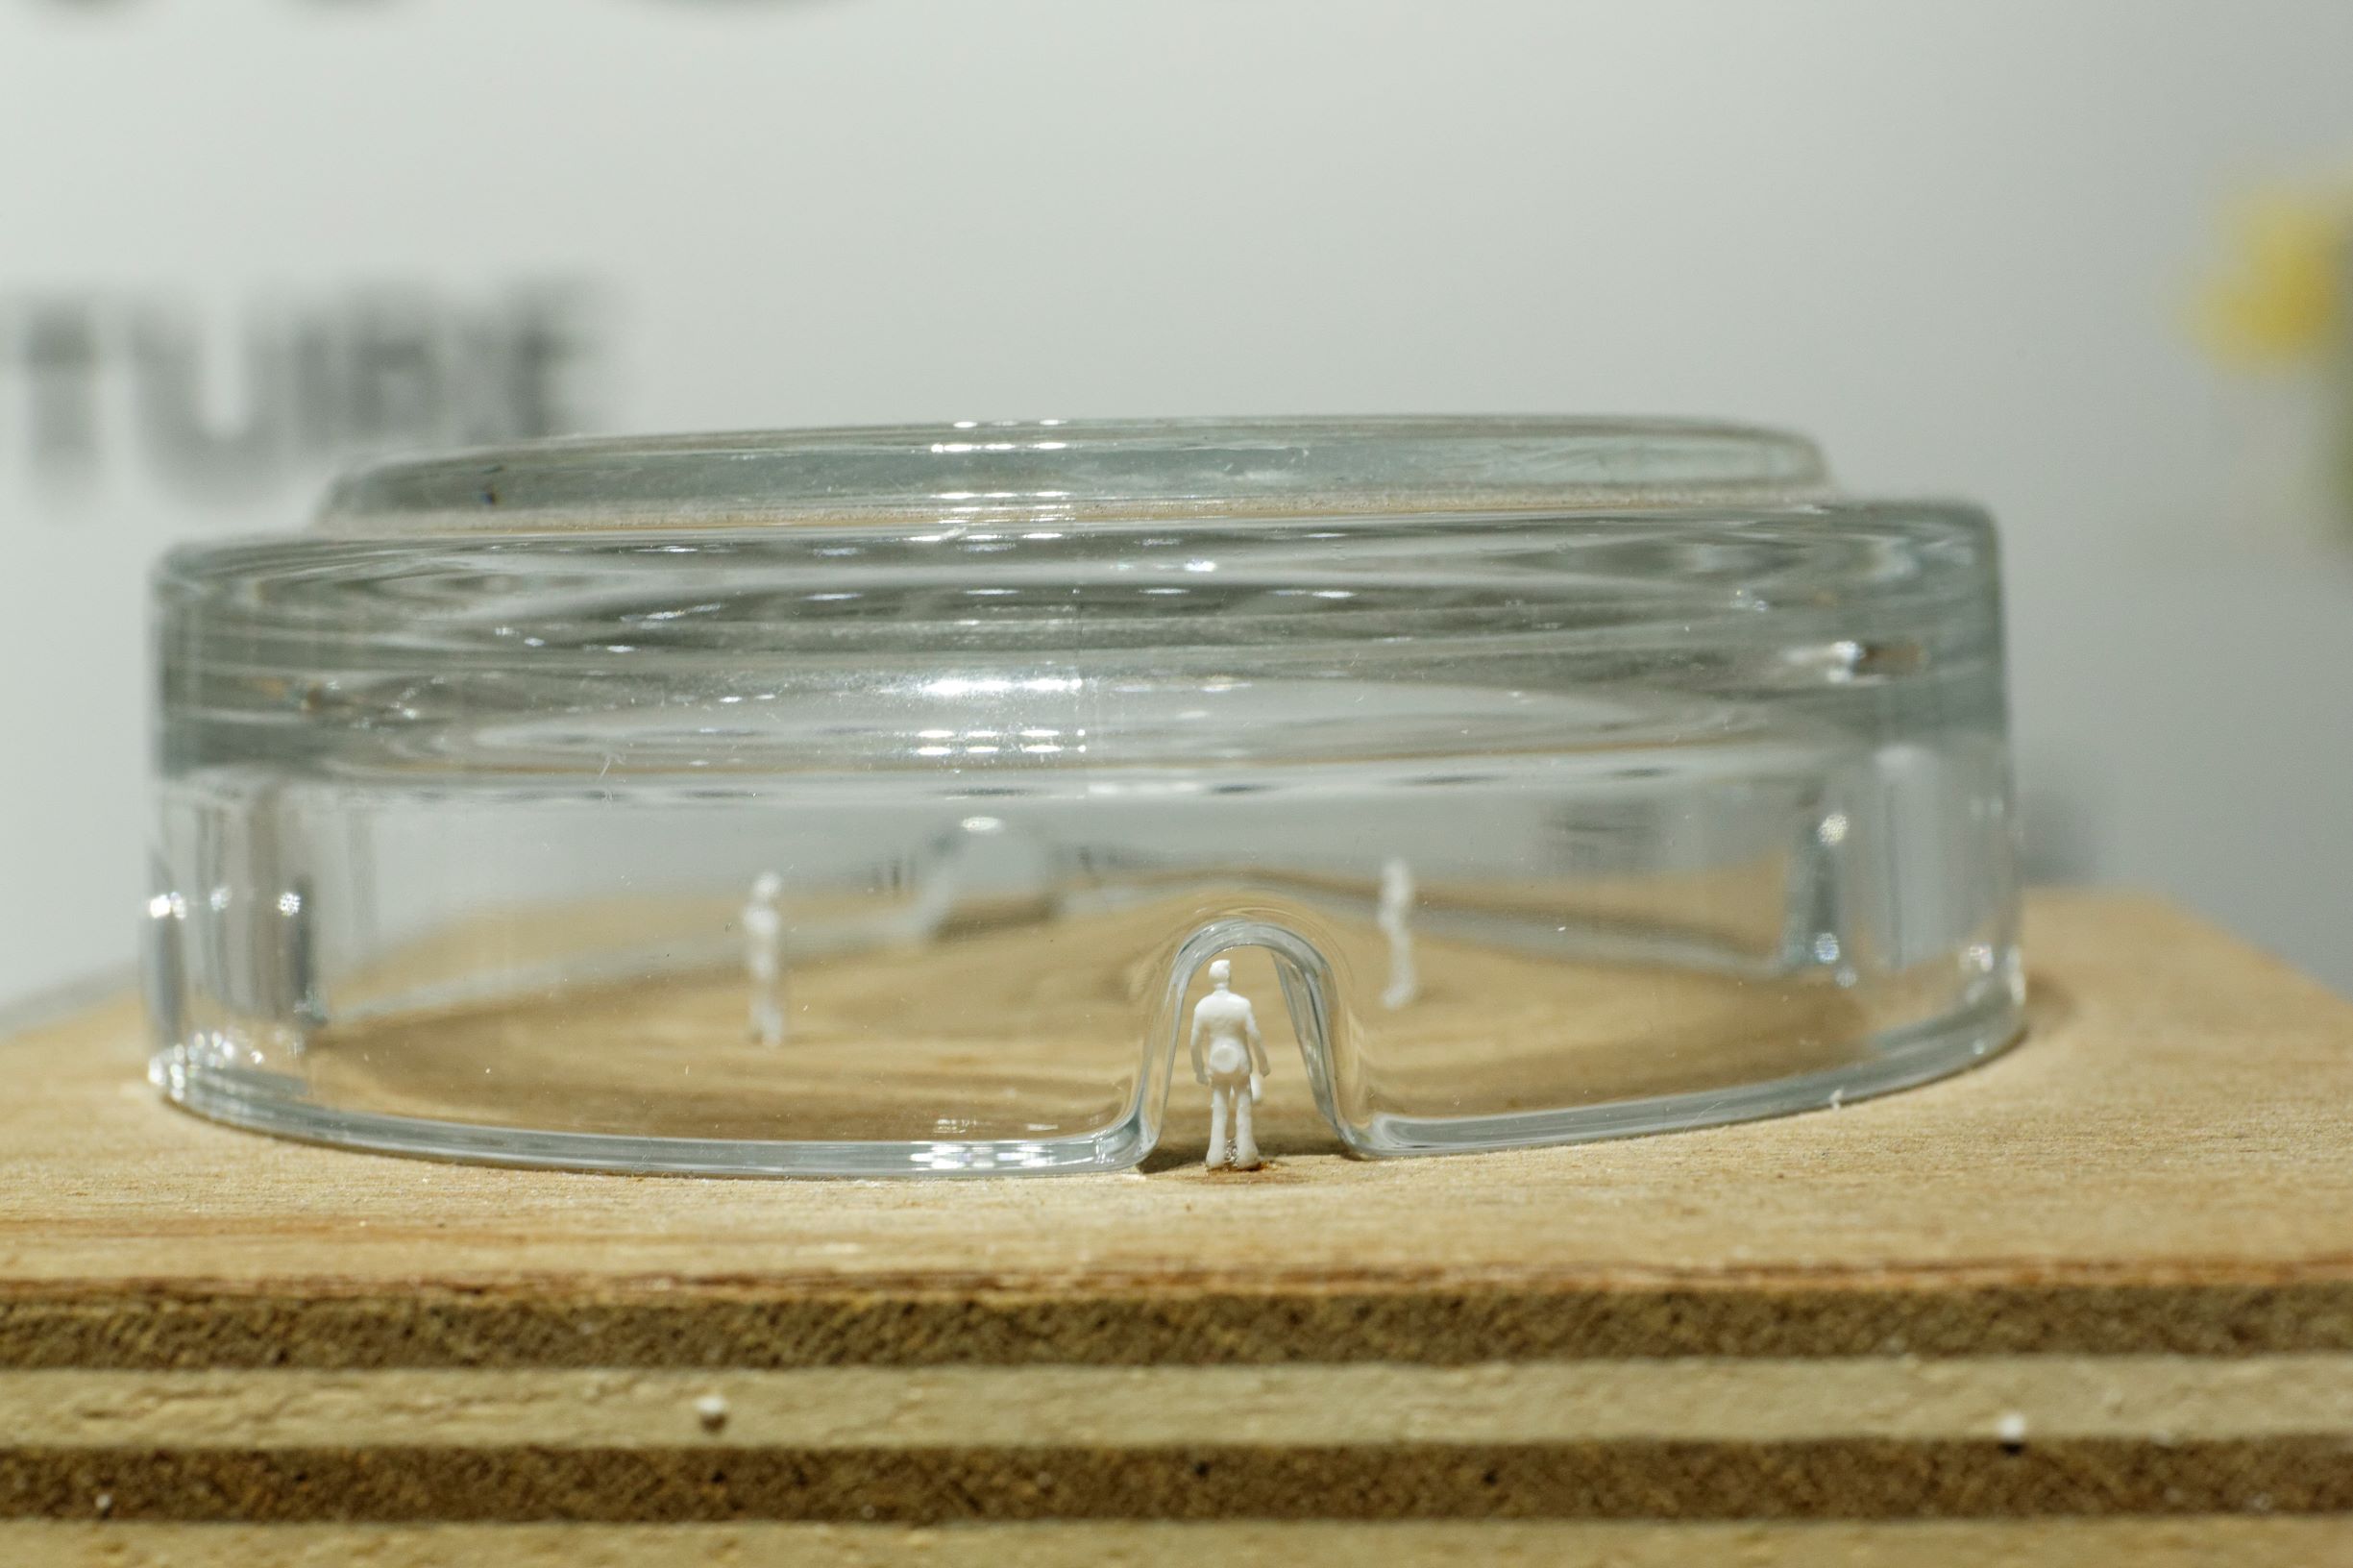 figurines inside an overturned glass ashtray